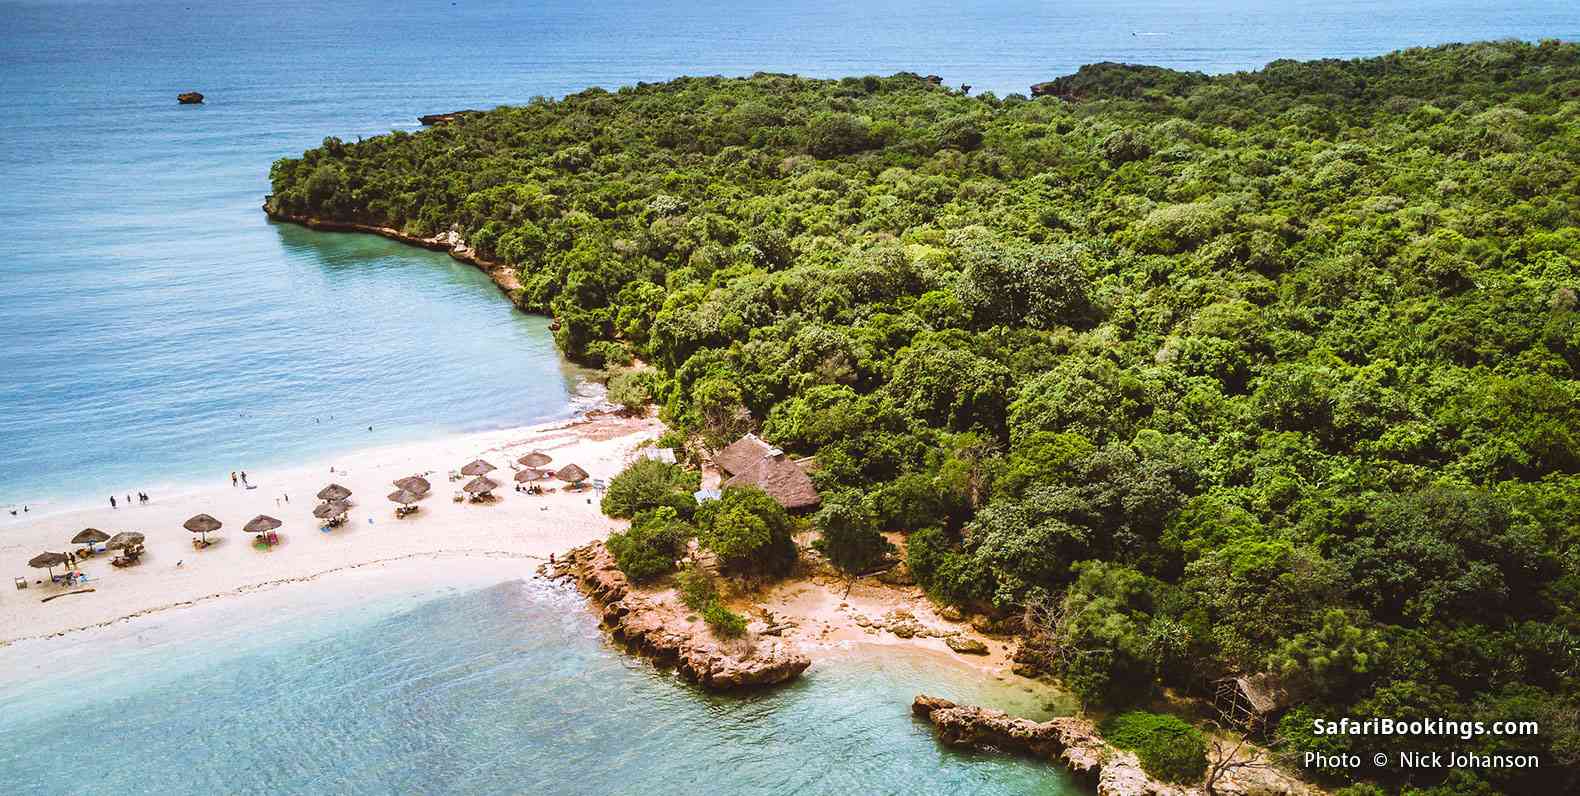 Bongoyo Island as seen from above